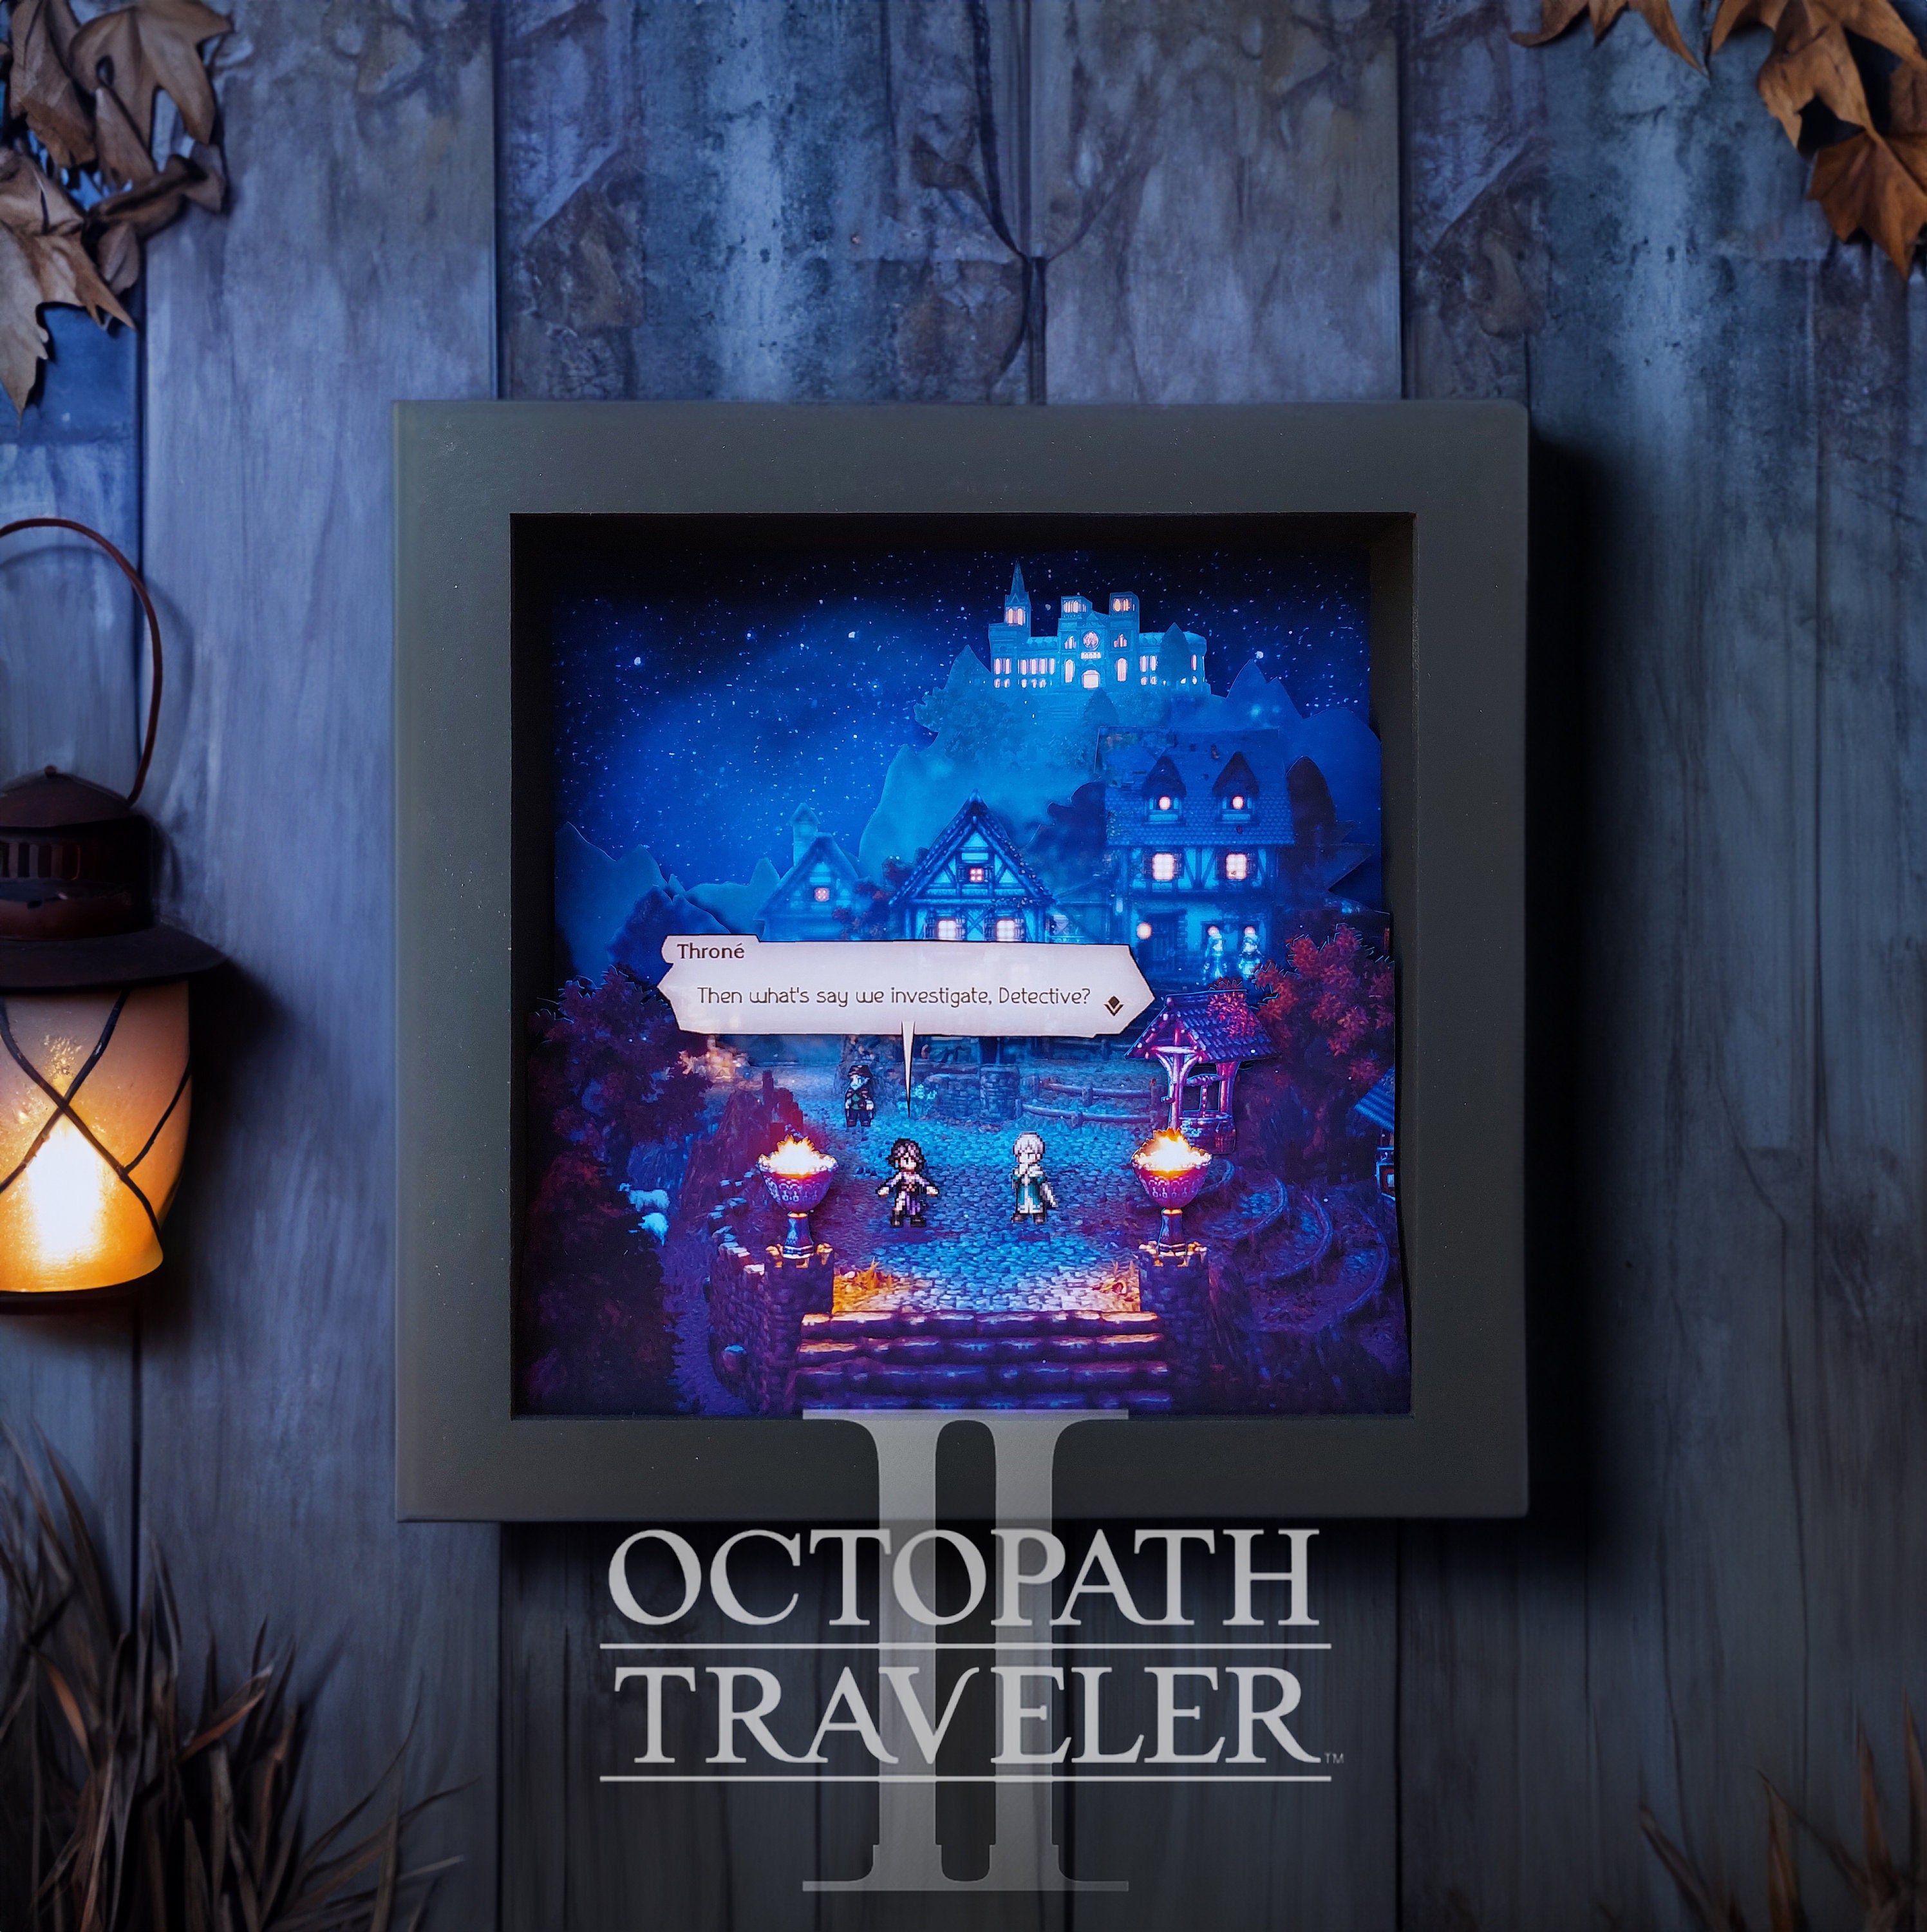 Octopath Traveler 2 - Merry Hills Journey, A Mysterious Box